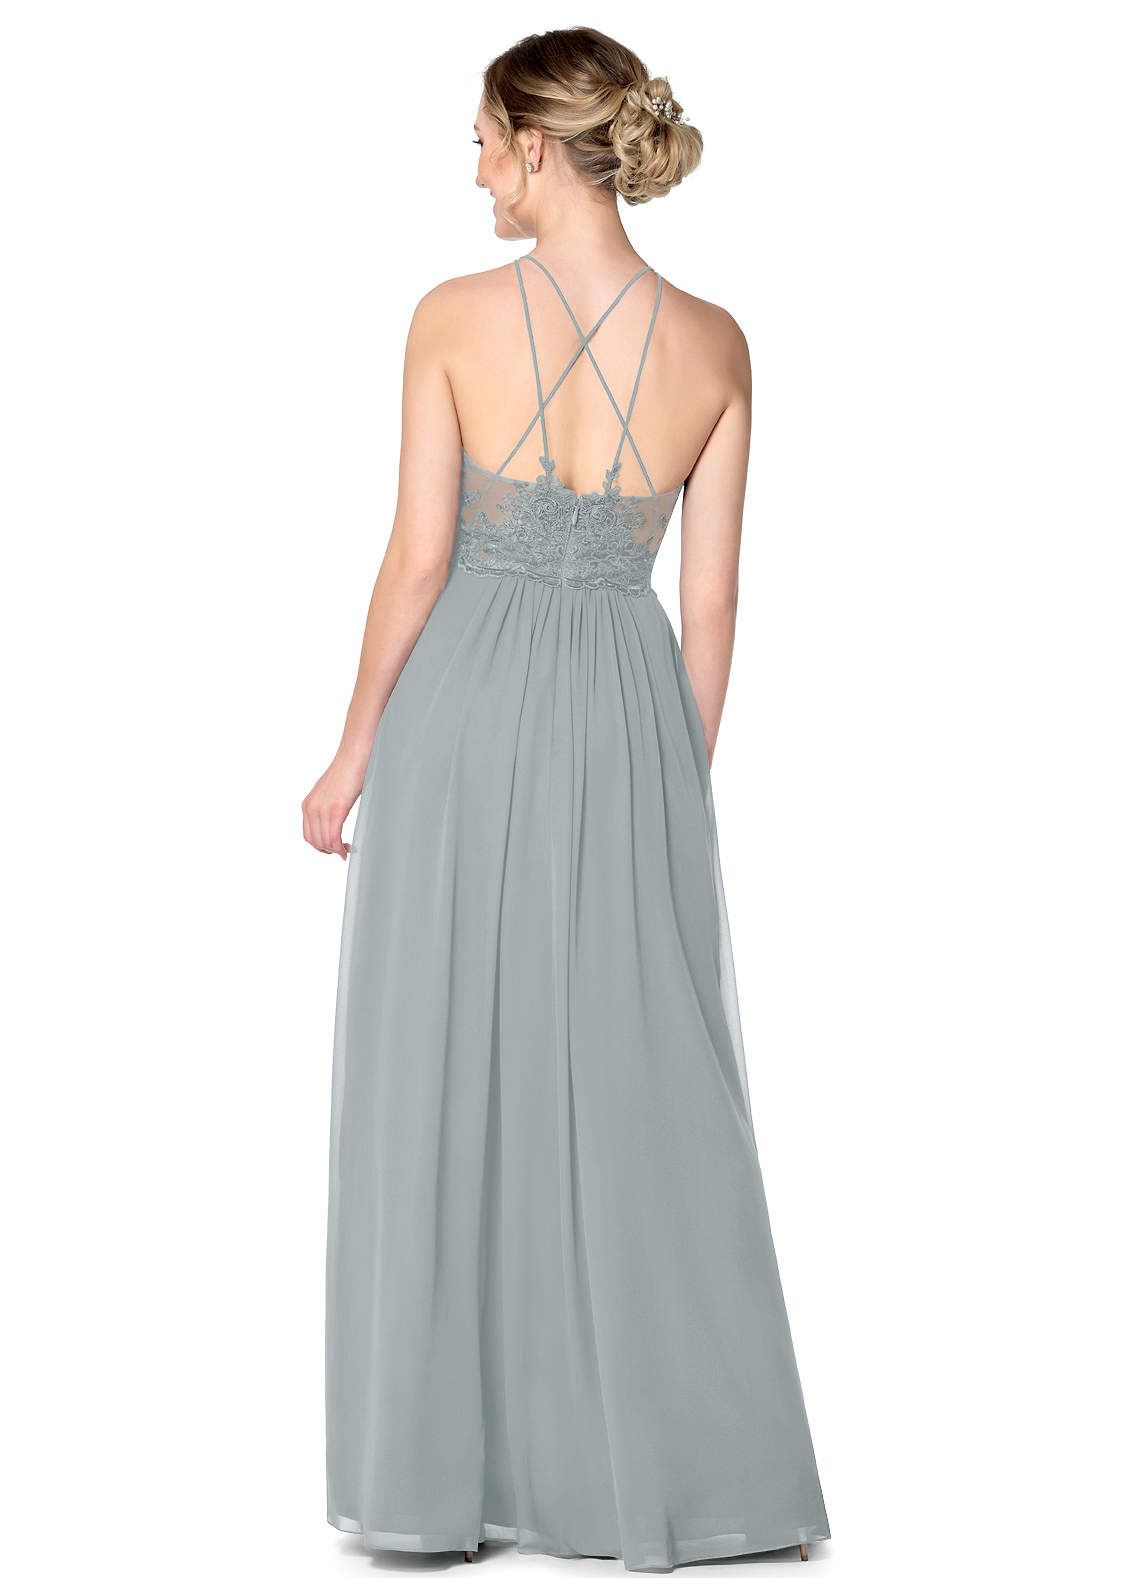 Azazie Ginger Allure Bridesmaid Dresses A-Line Lace Chiffon Floor-Length Dress image1